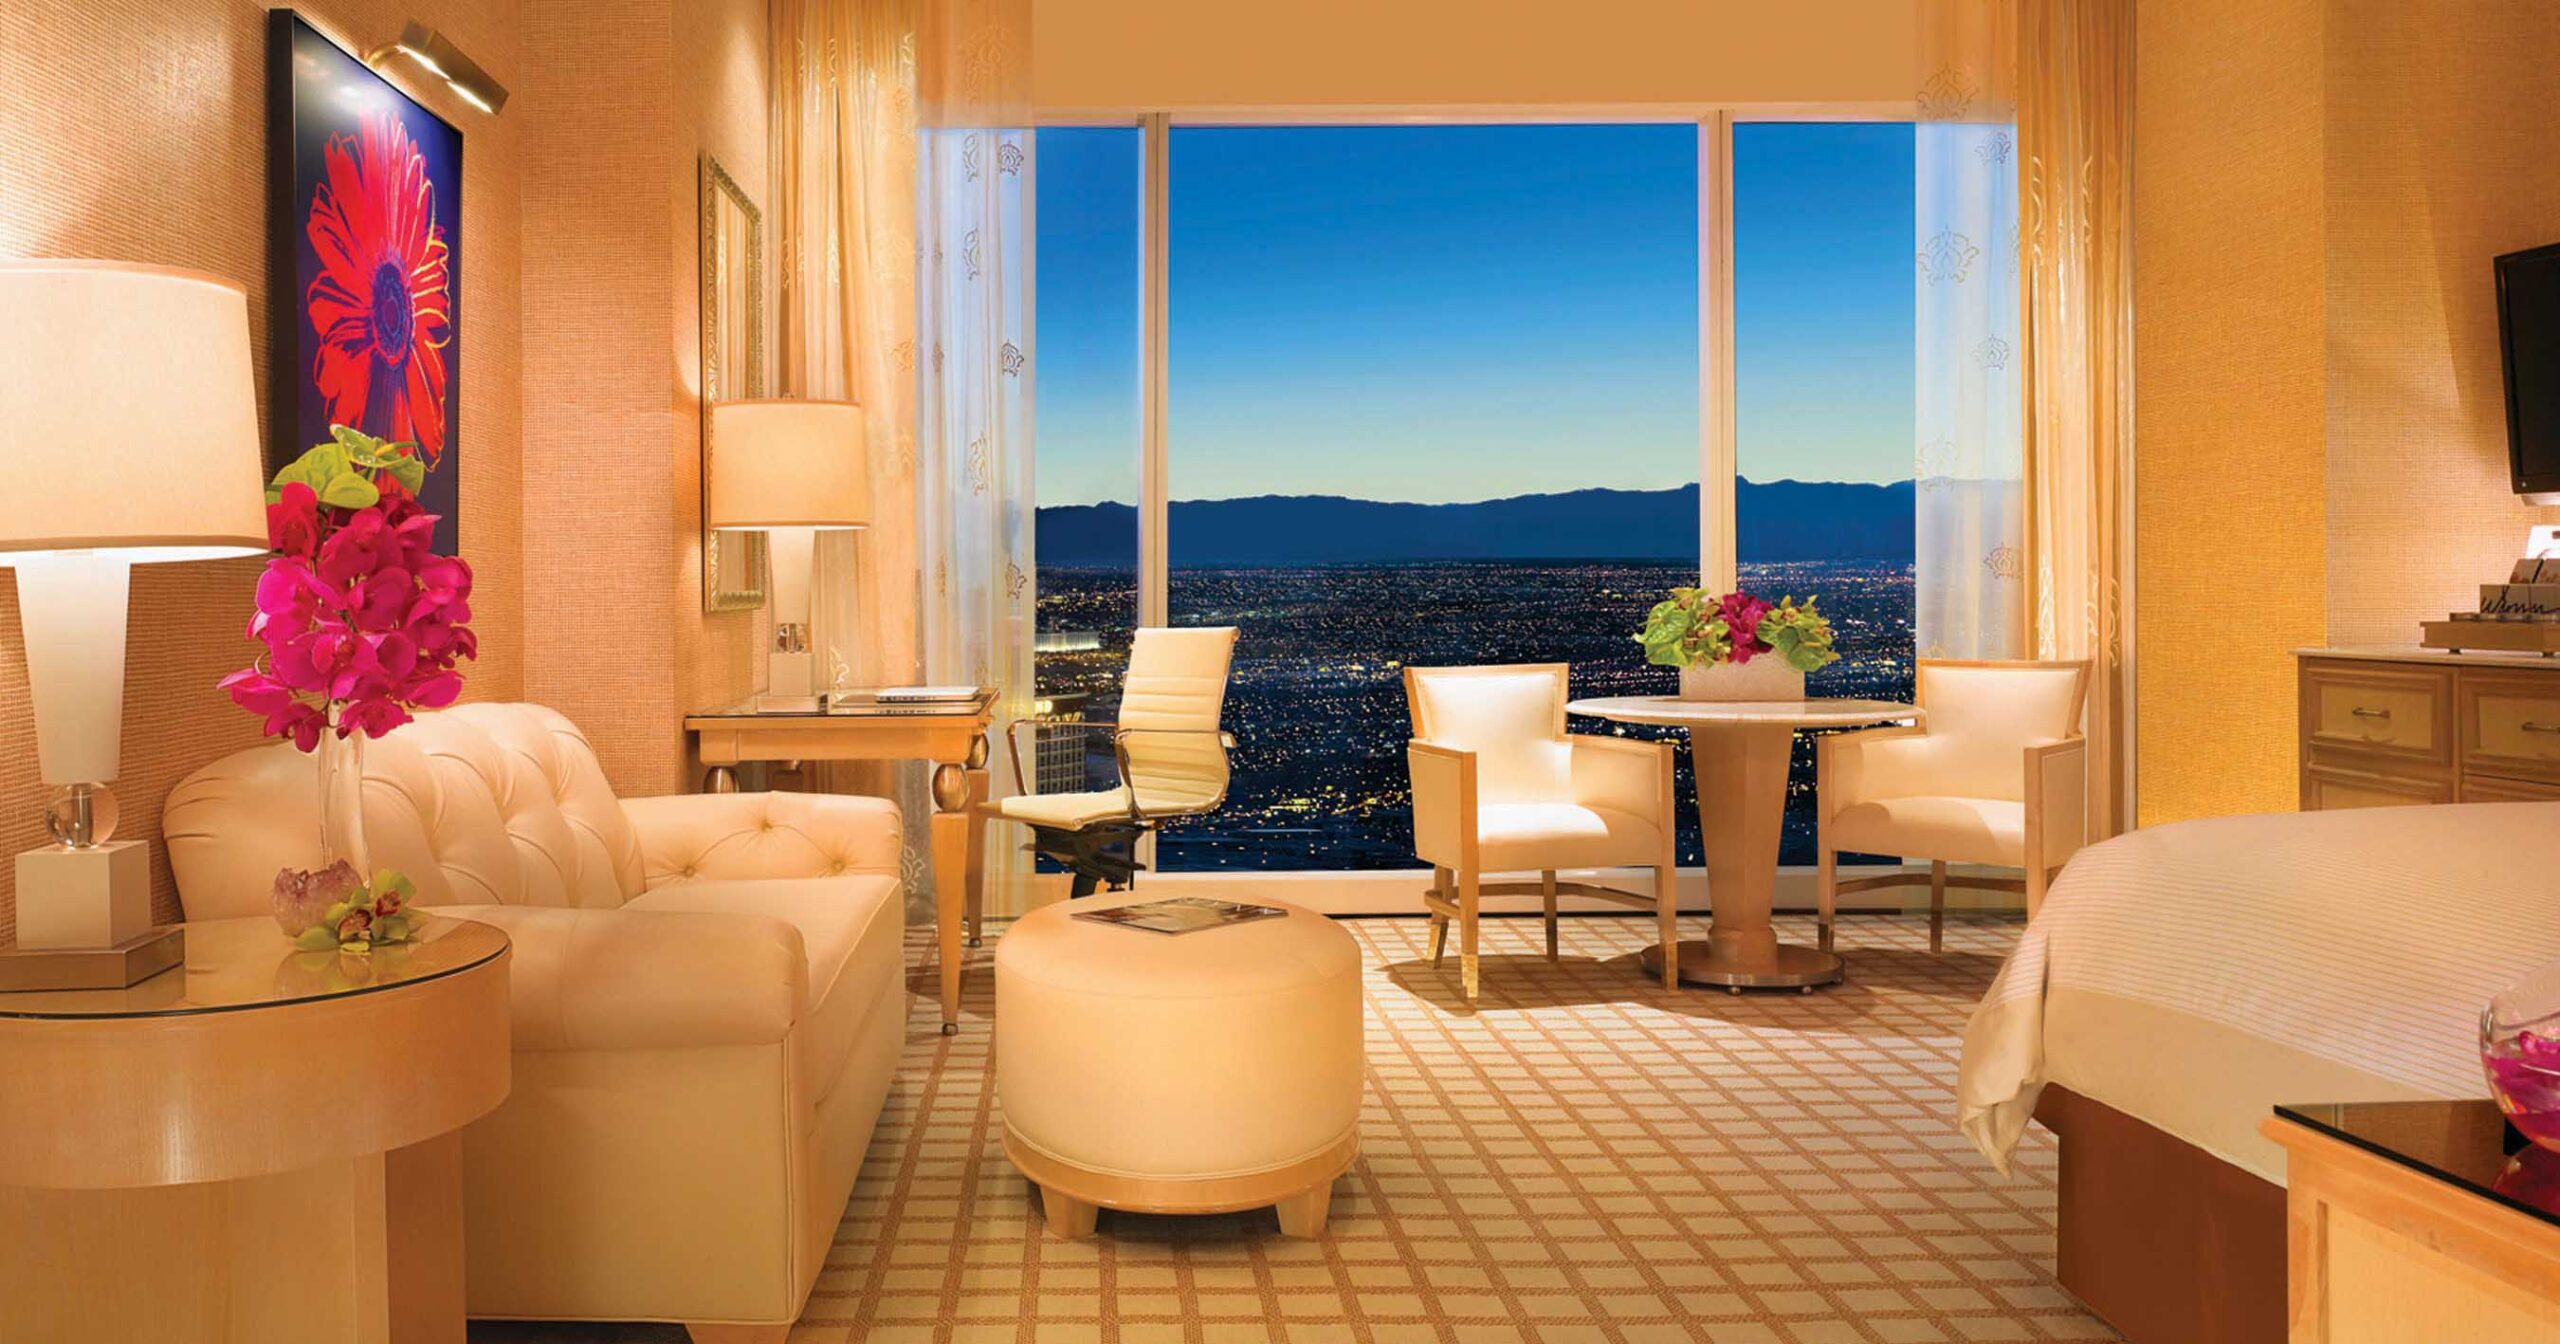 Wynn room Las Vegas hotels